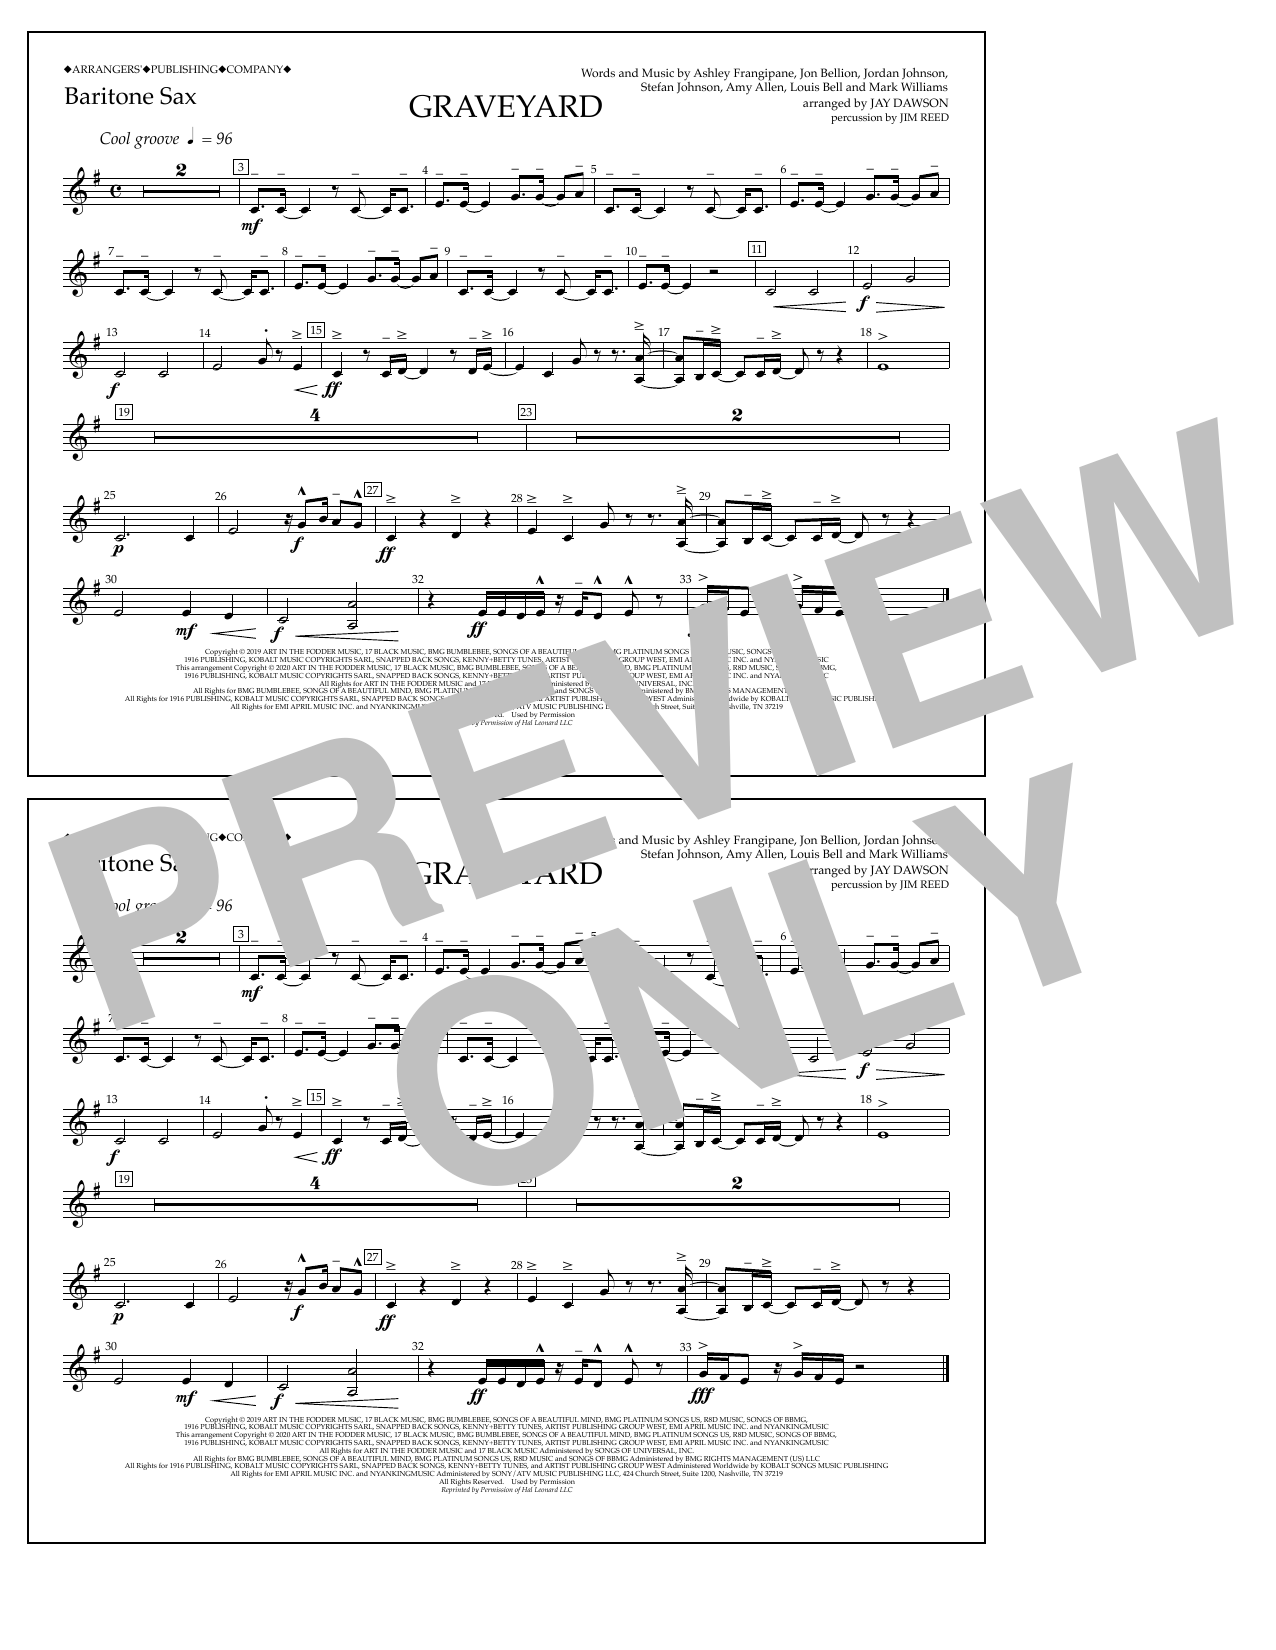 Halsey Graveyard (arr. Jay Dawson) - Bari Sax Sheet Music Notes & Chords for Marching Band - Download or Print PDF